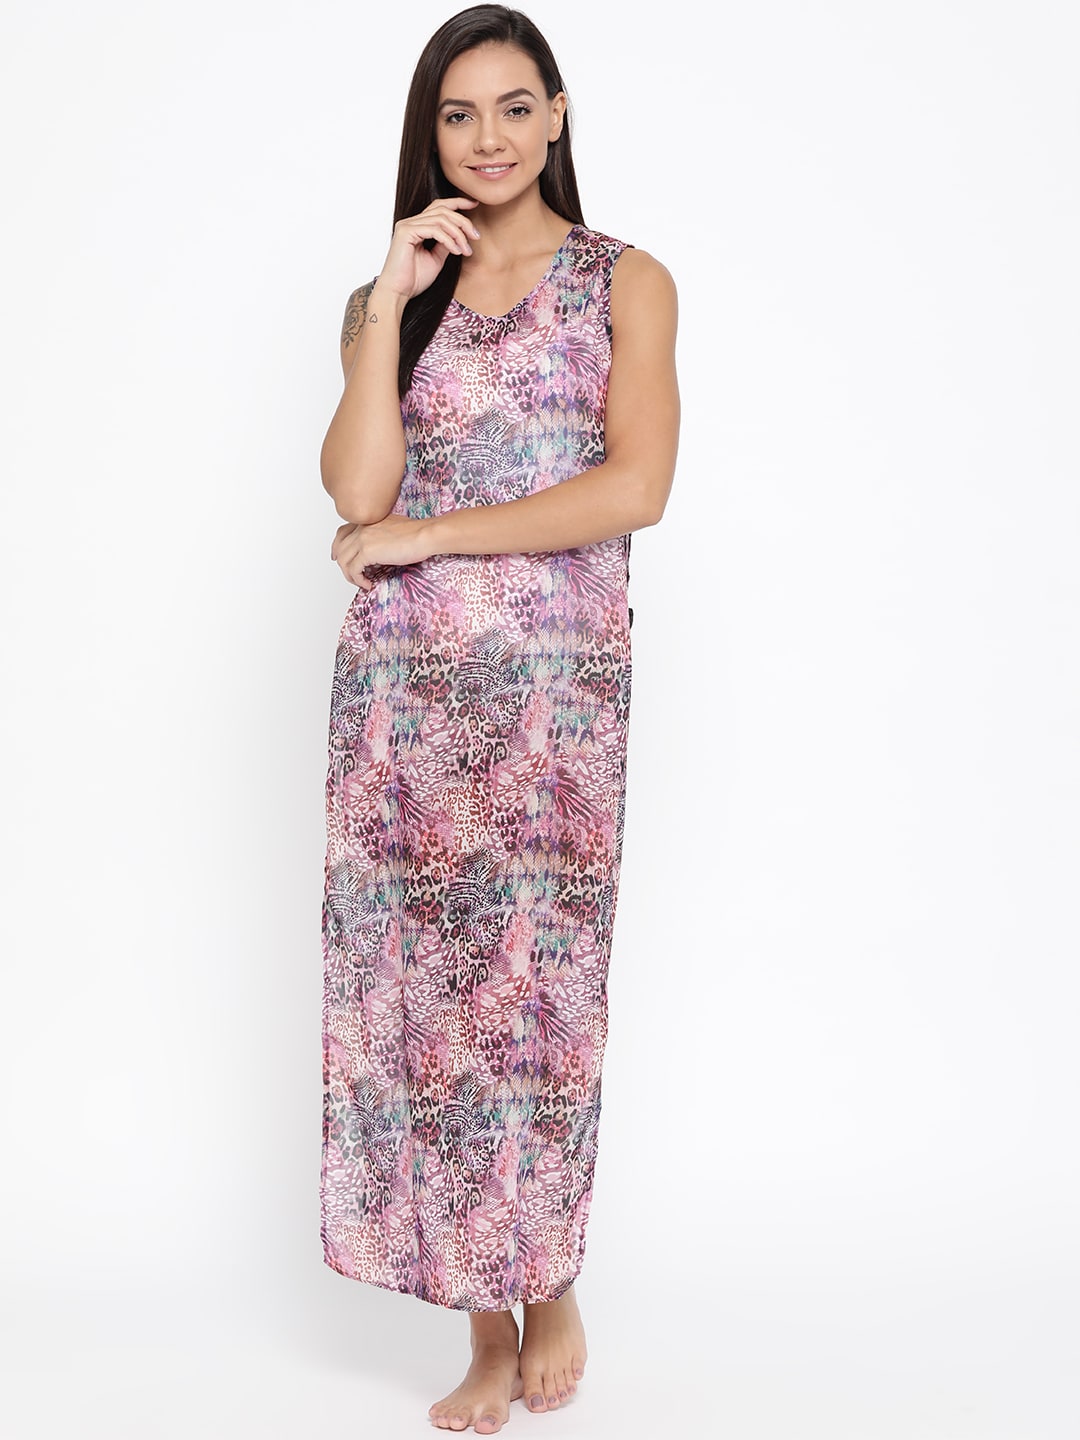 EROTISSCH Multicoloured Printed Semi-Sheer Cover-Up Dress Price in India